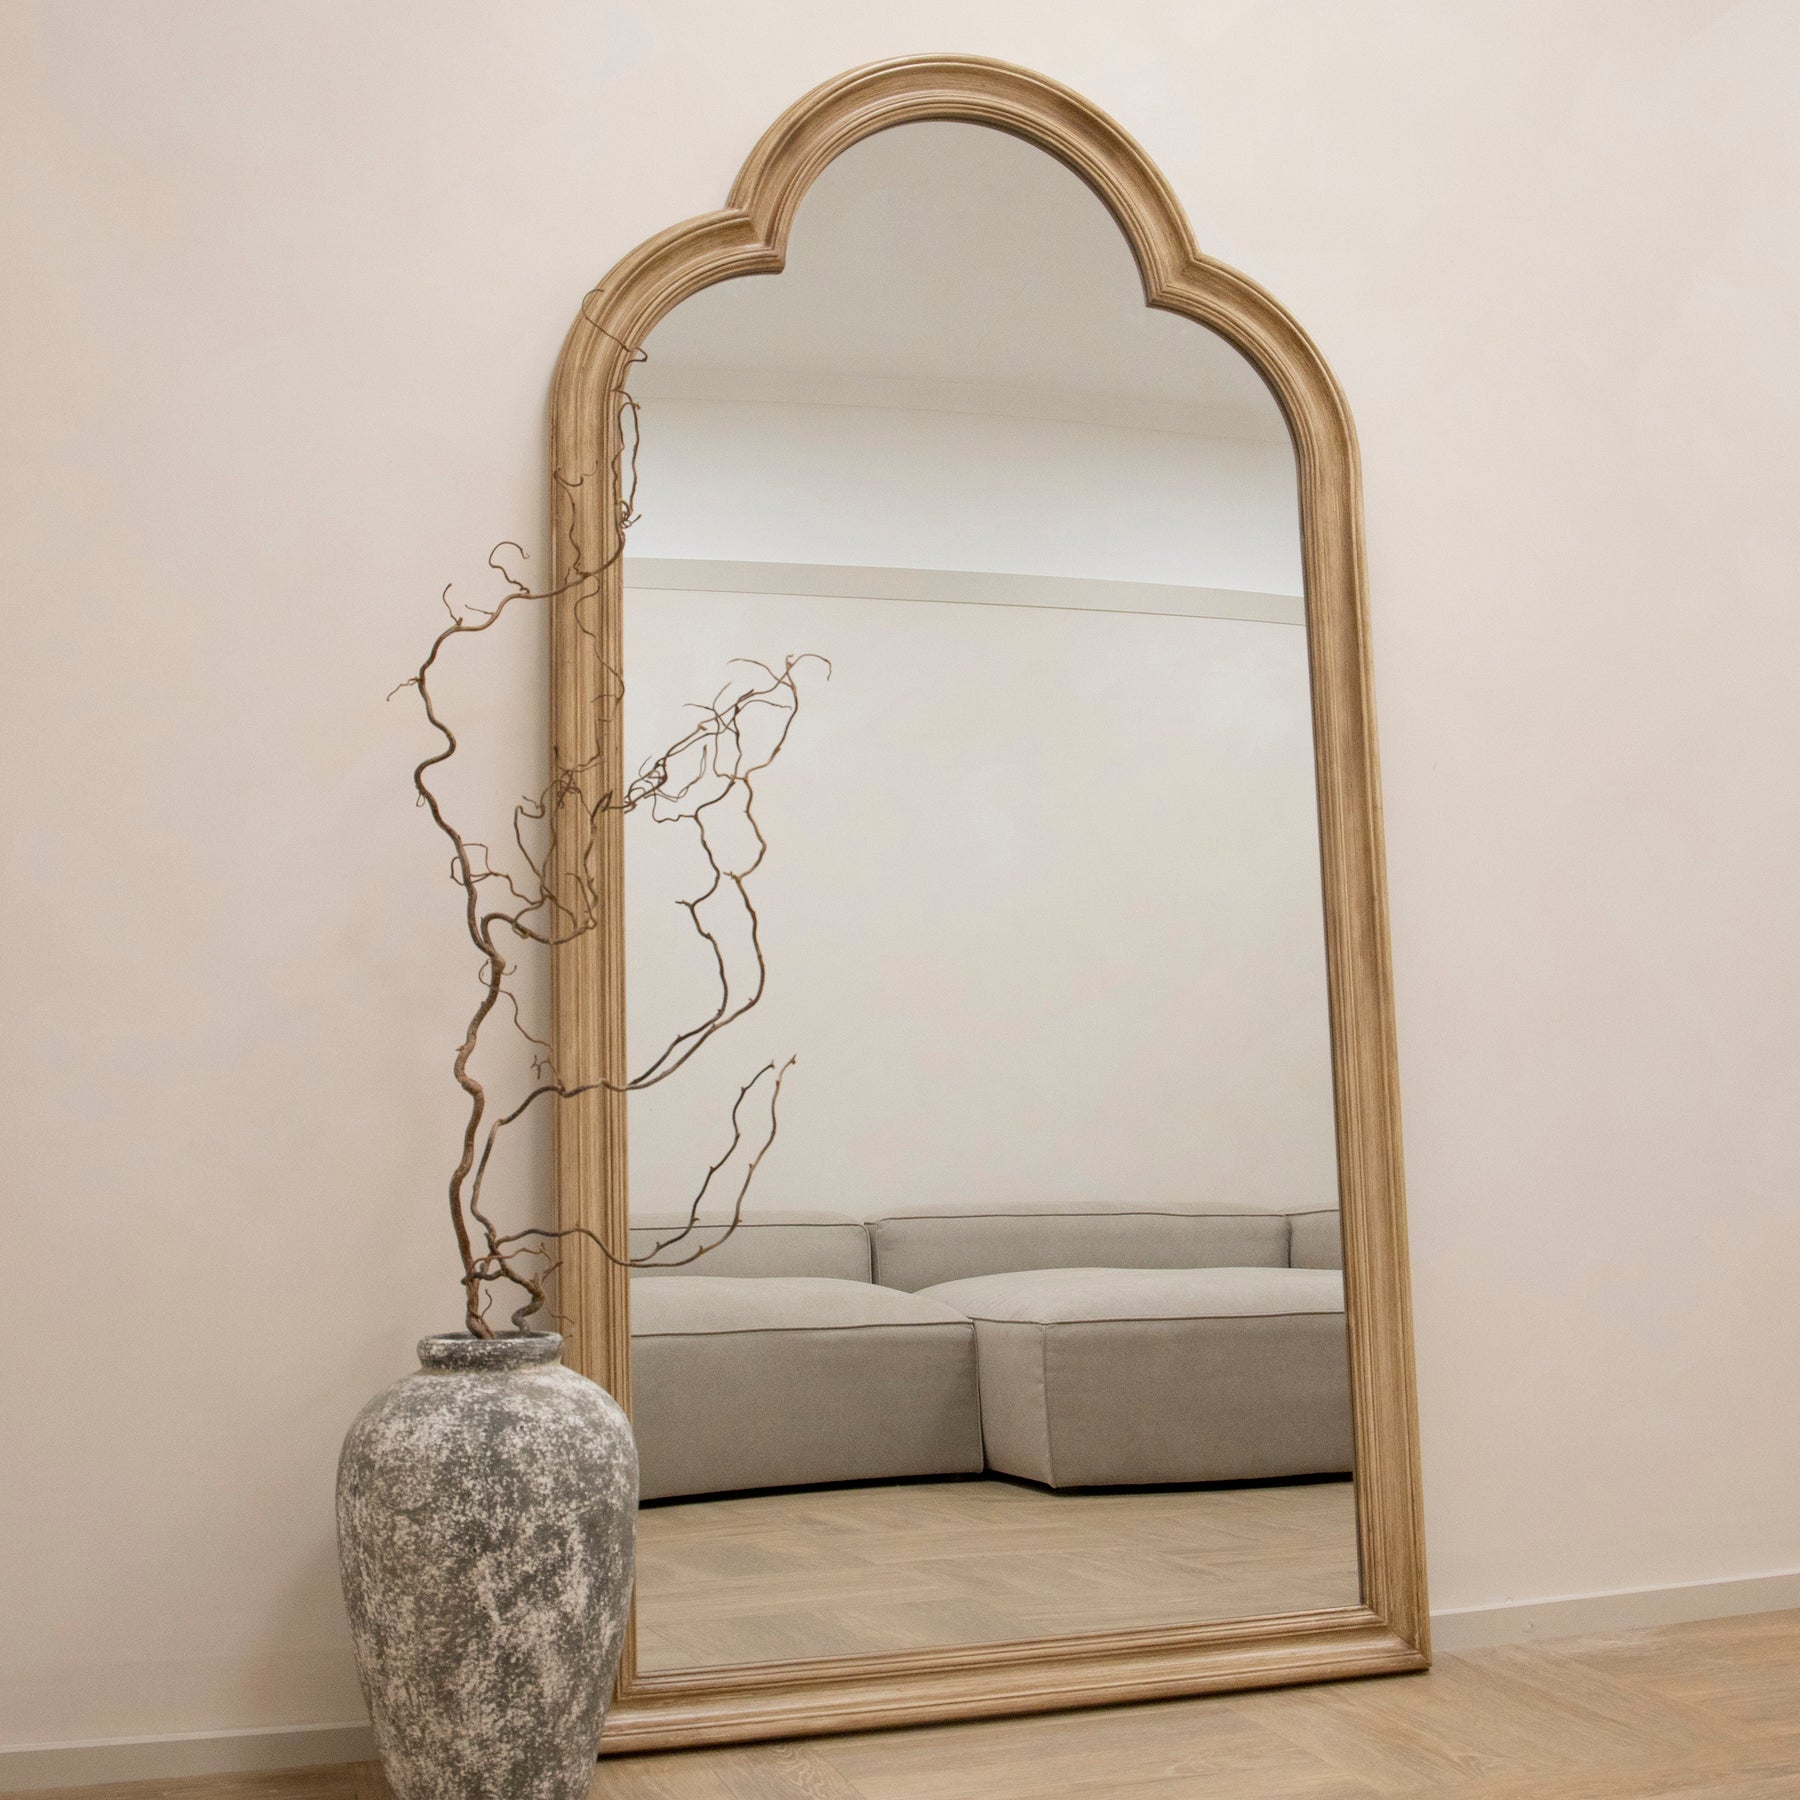 Melilla - Washed Wood Arched Full Length Mirror 190cm x 99cm